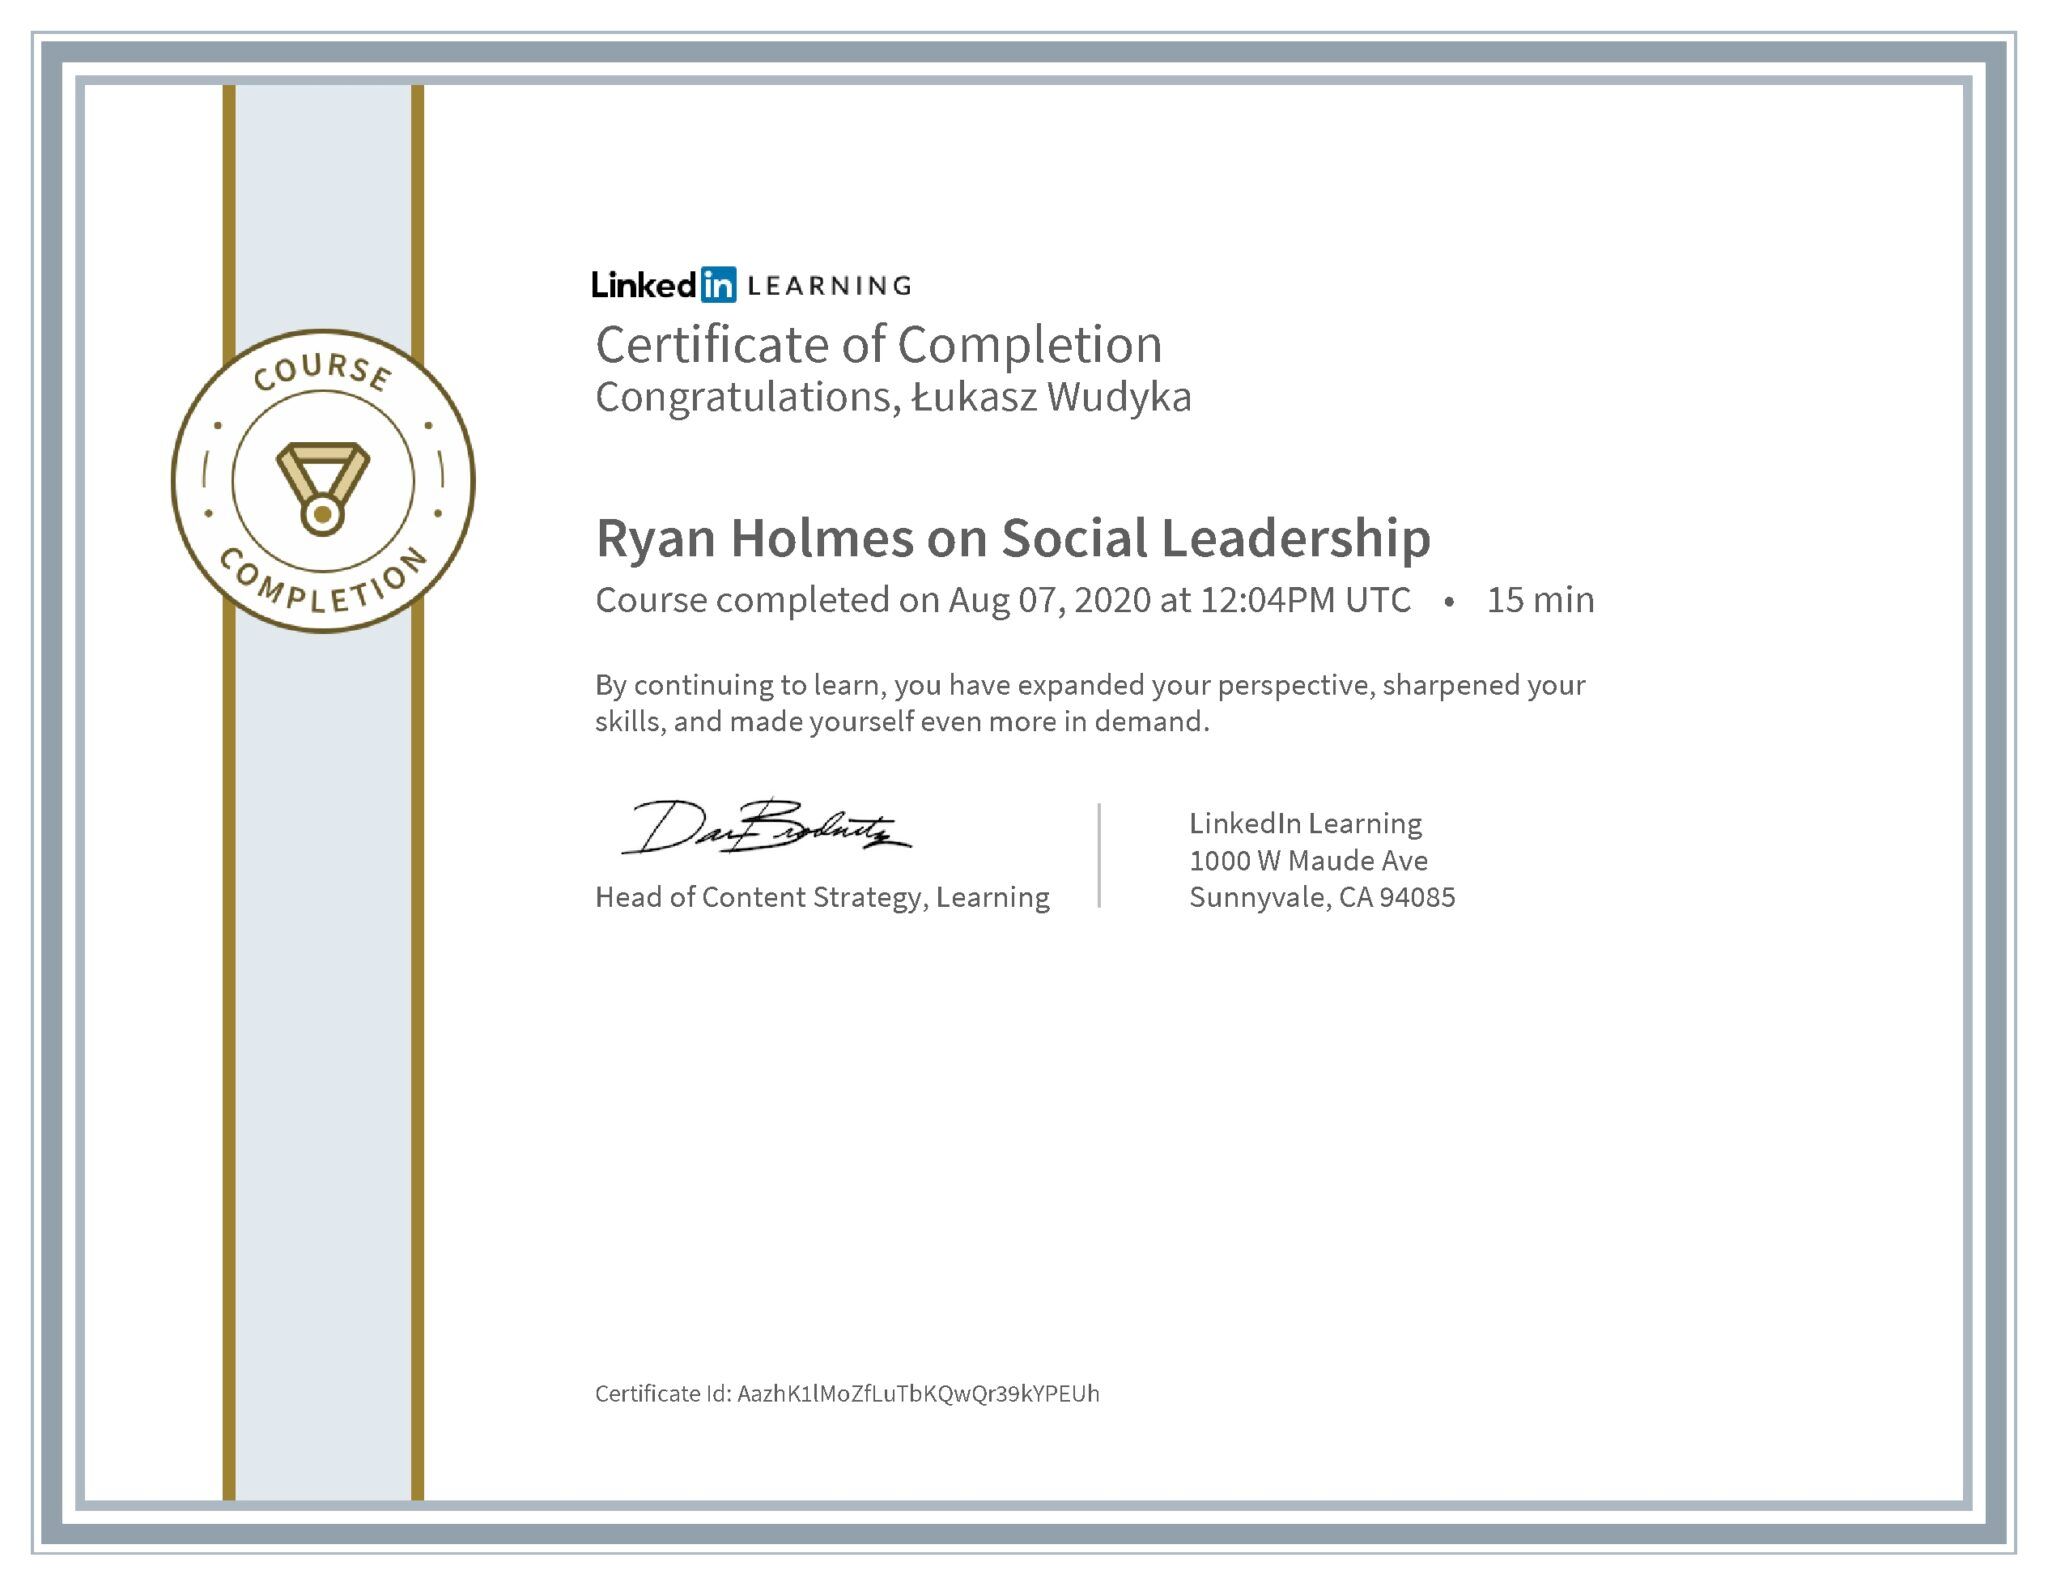 Łukasz Wudyka certyfikat LinkedIn Ryan Holmes on Social Leadership